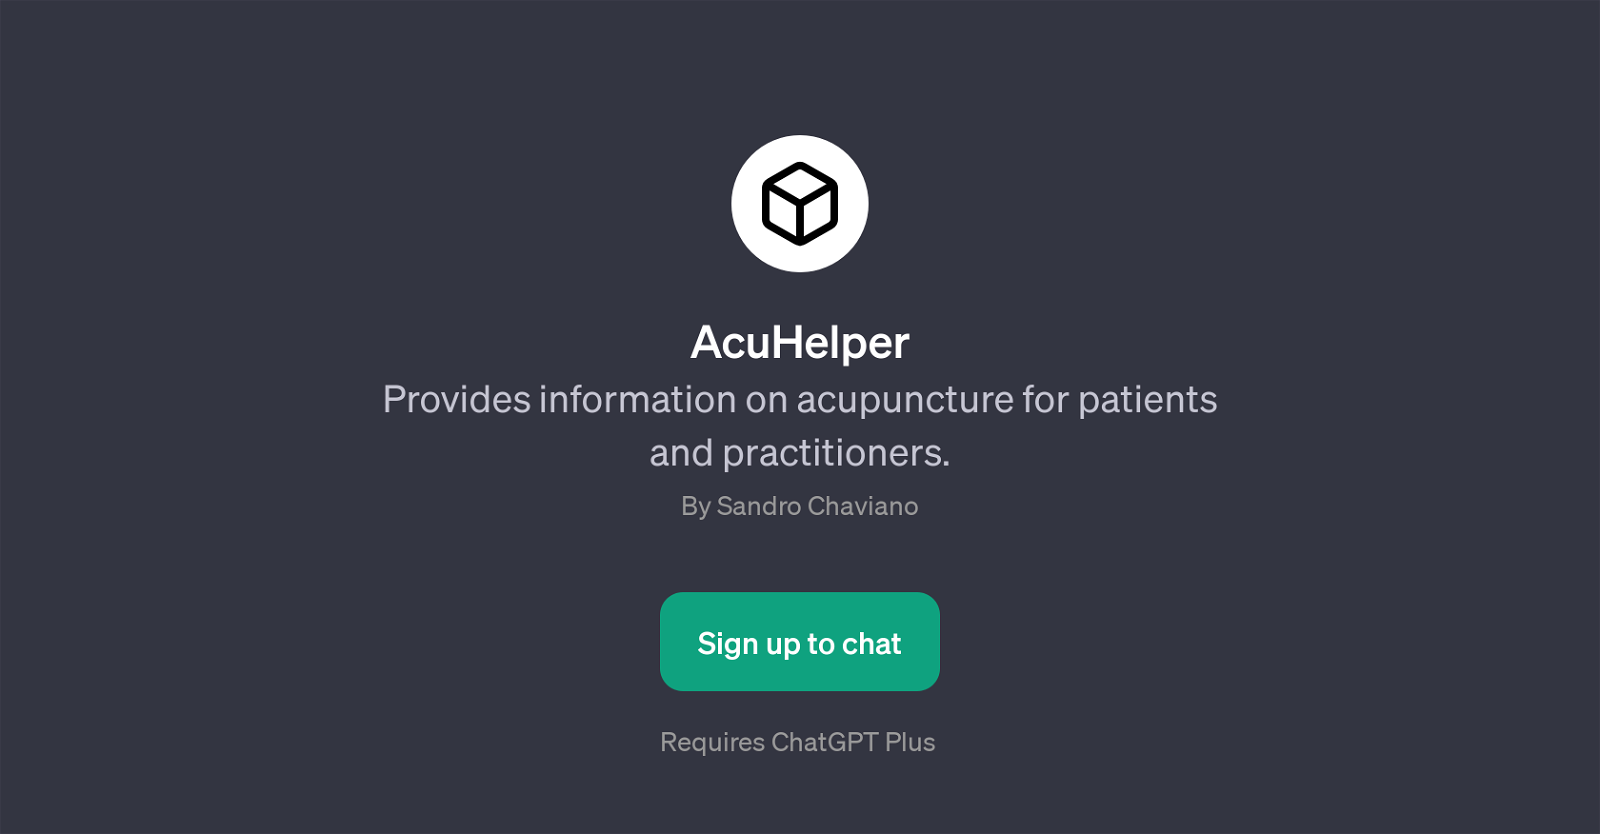 AcuHelper website